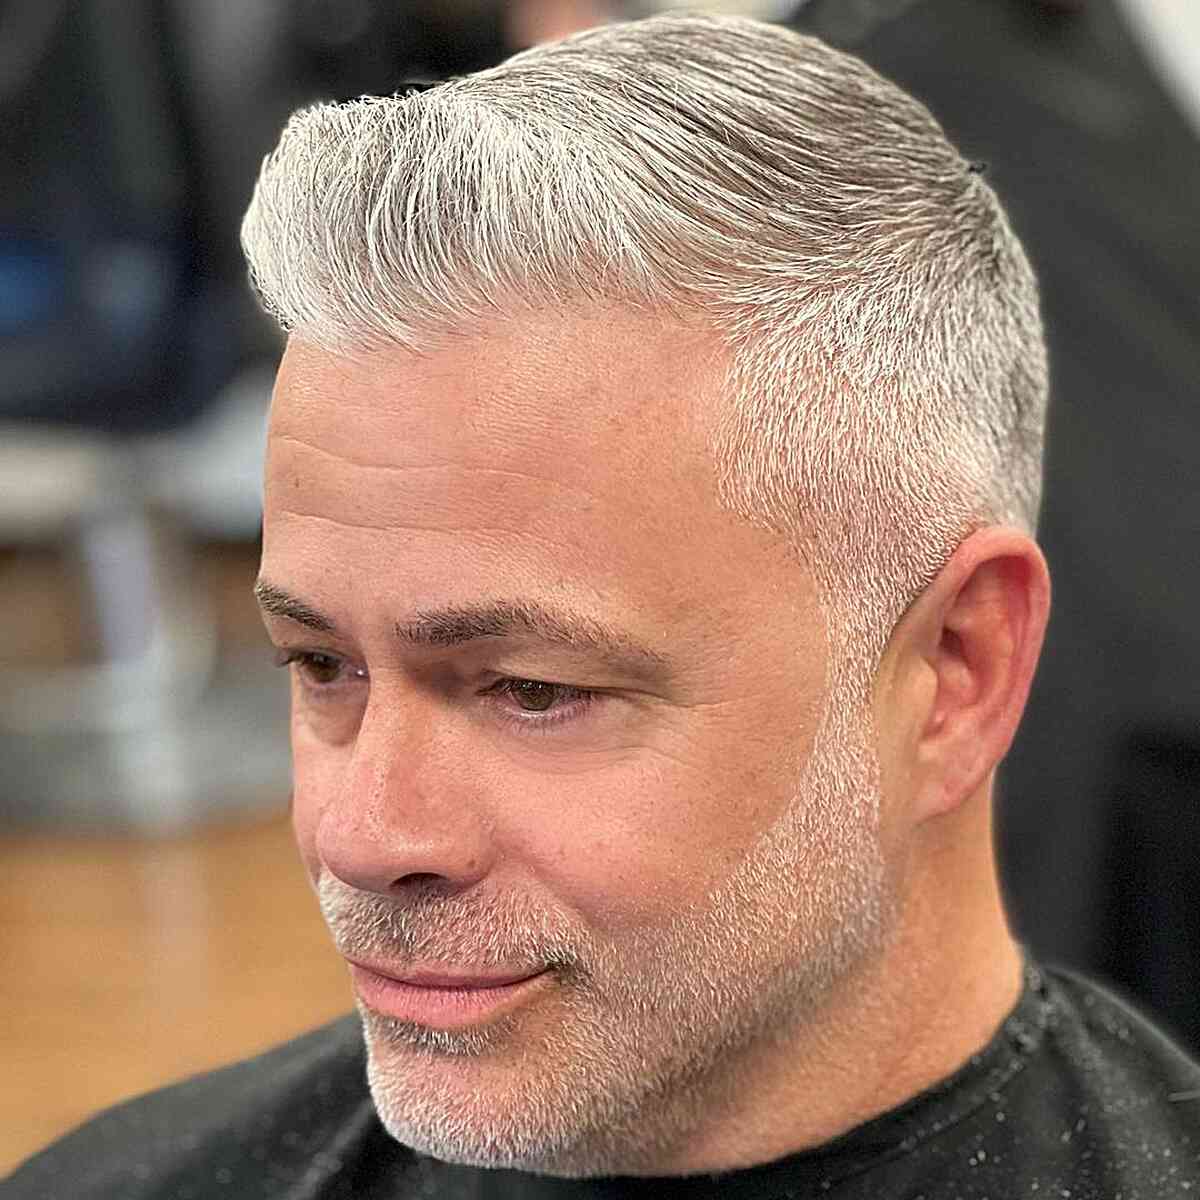 Silver Fox Comb Over for Older Men